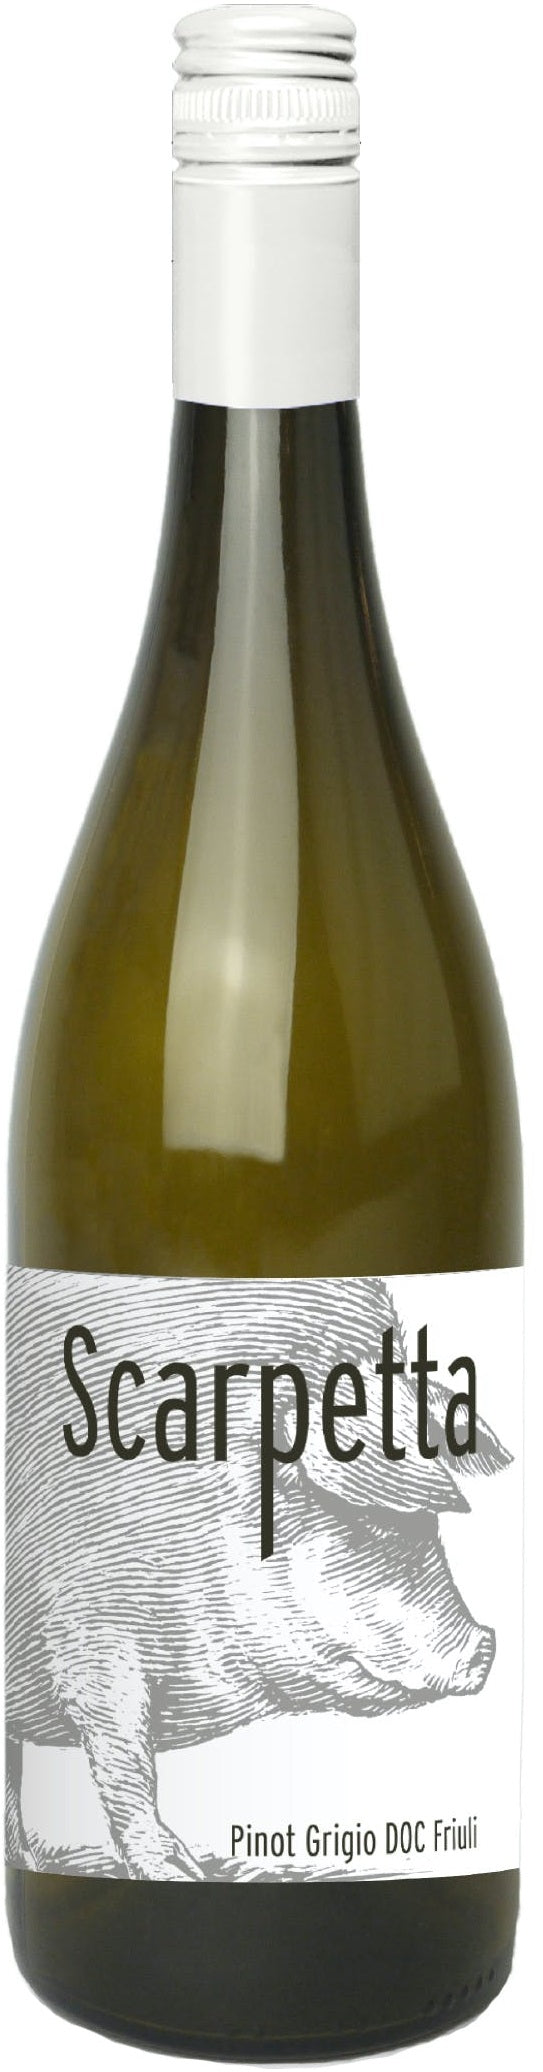 Vino Blanco Scarpetta Pinot Grigio 750 ml